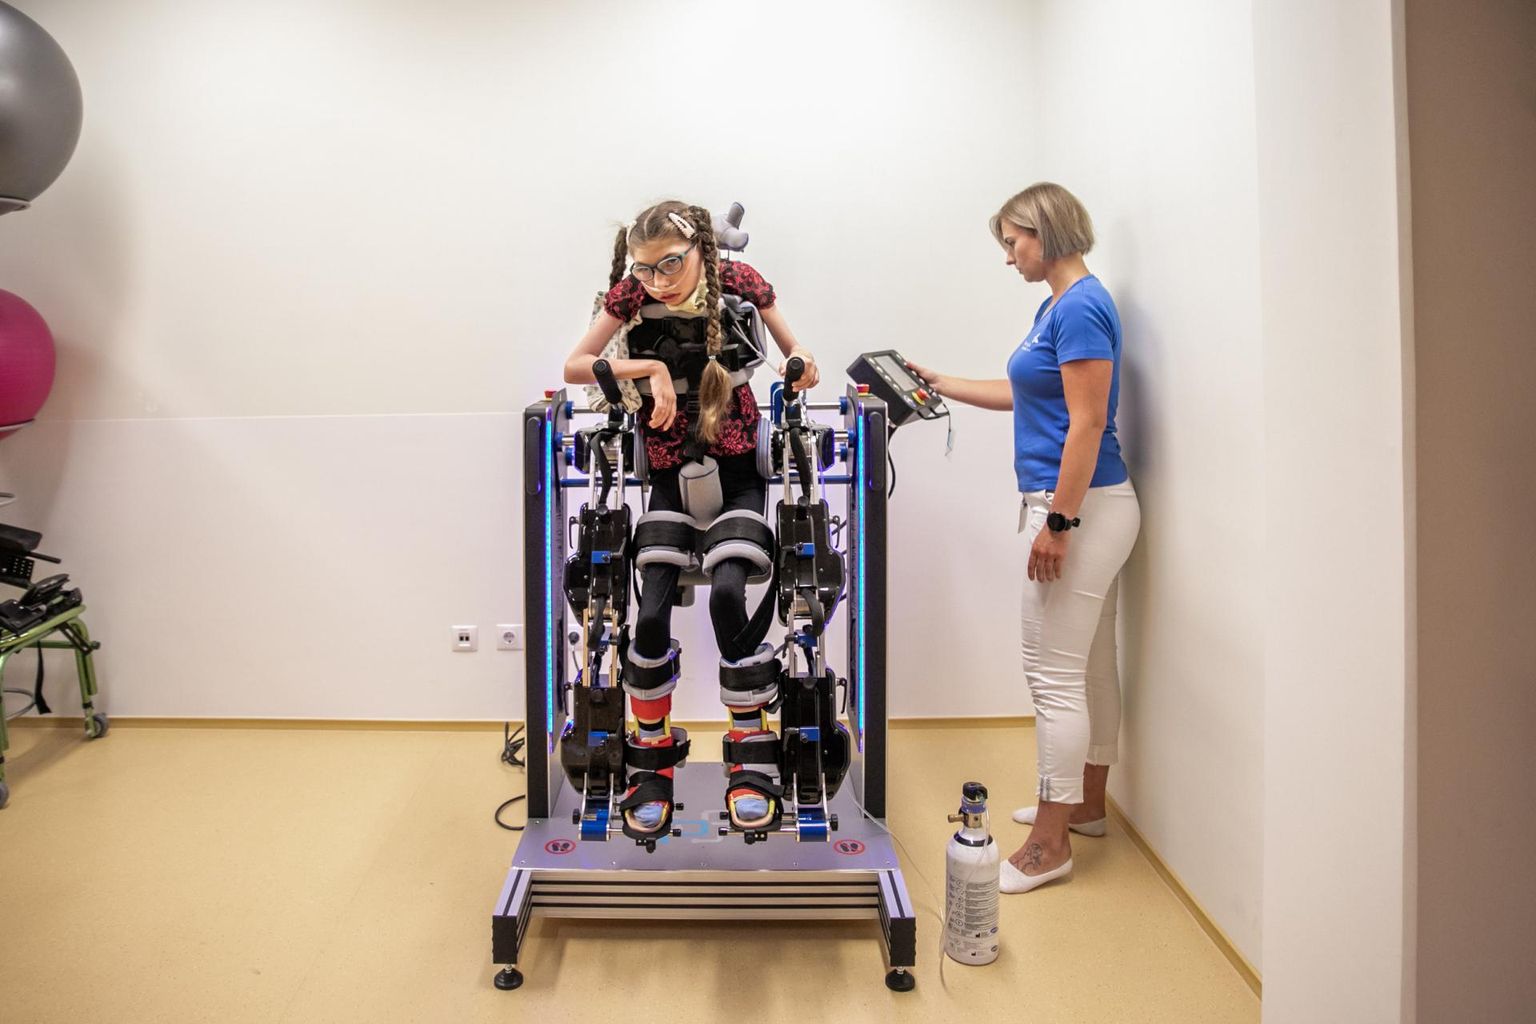 Kelli füsioterapeut Jaanika Kukk nentis, et kõnnirobot teeb tema töö tunduvalt lihtsamaks.